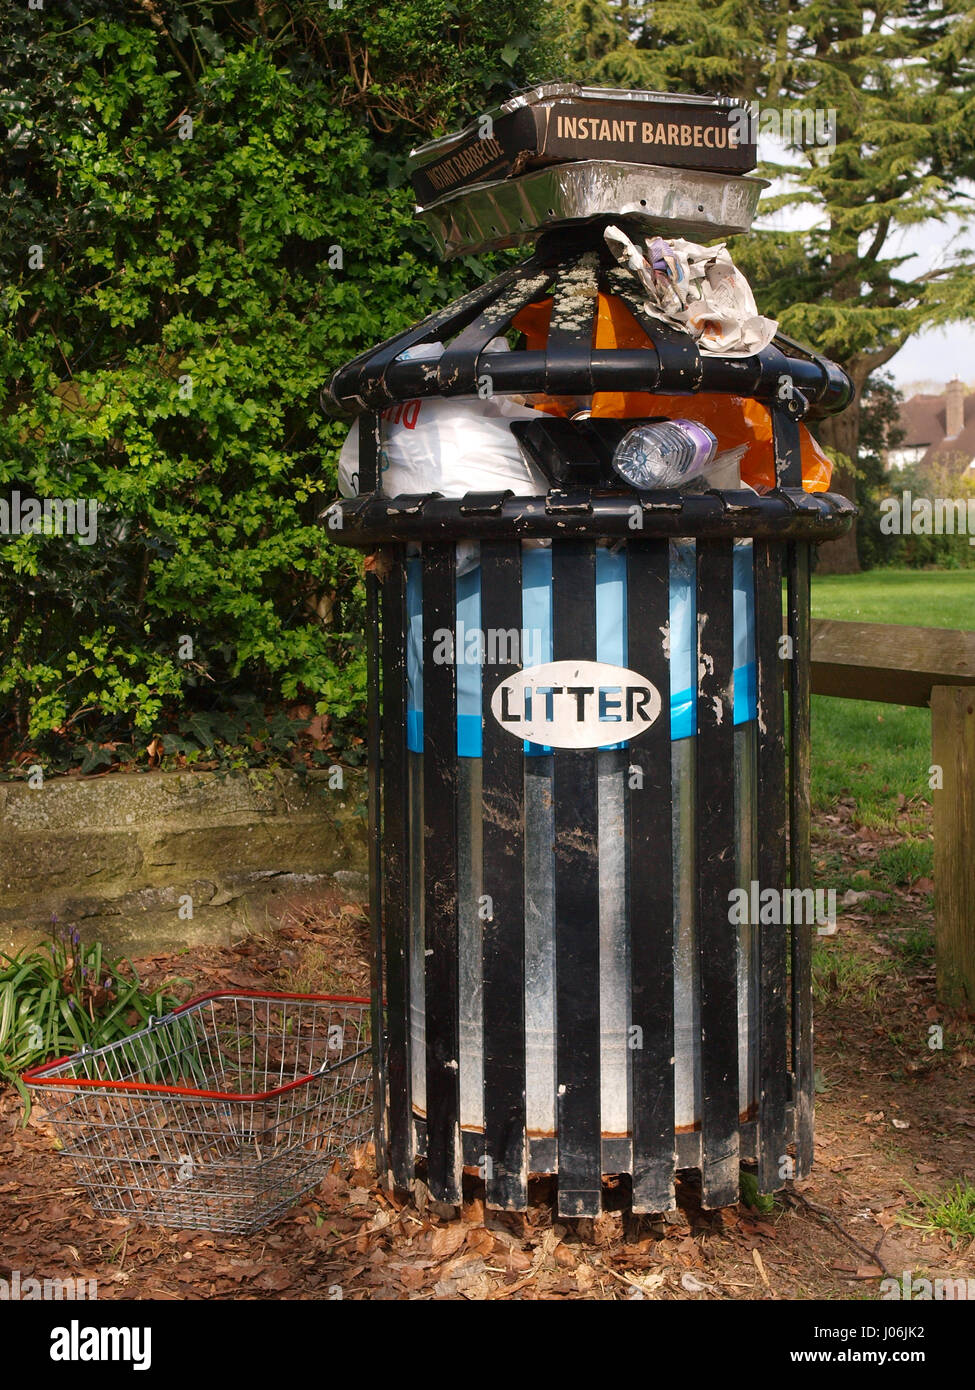 Litter bin full of rubbish Stock Photo